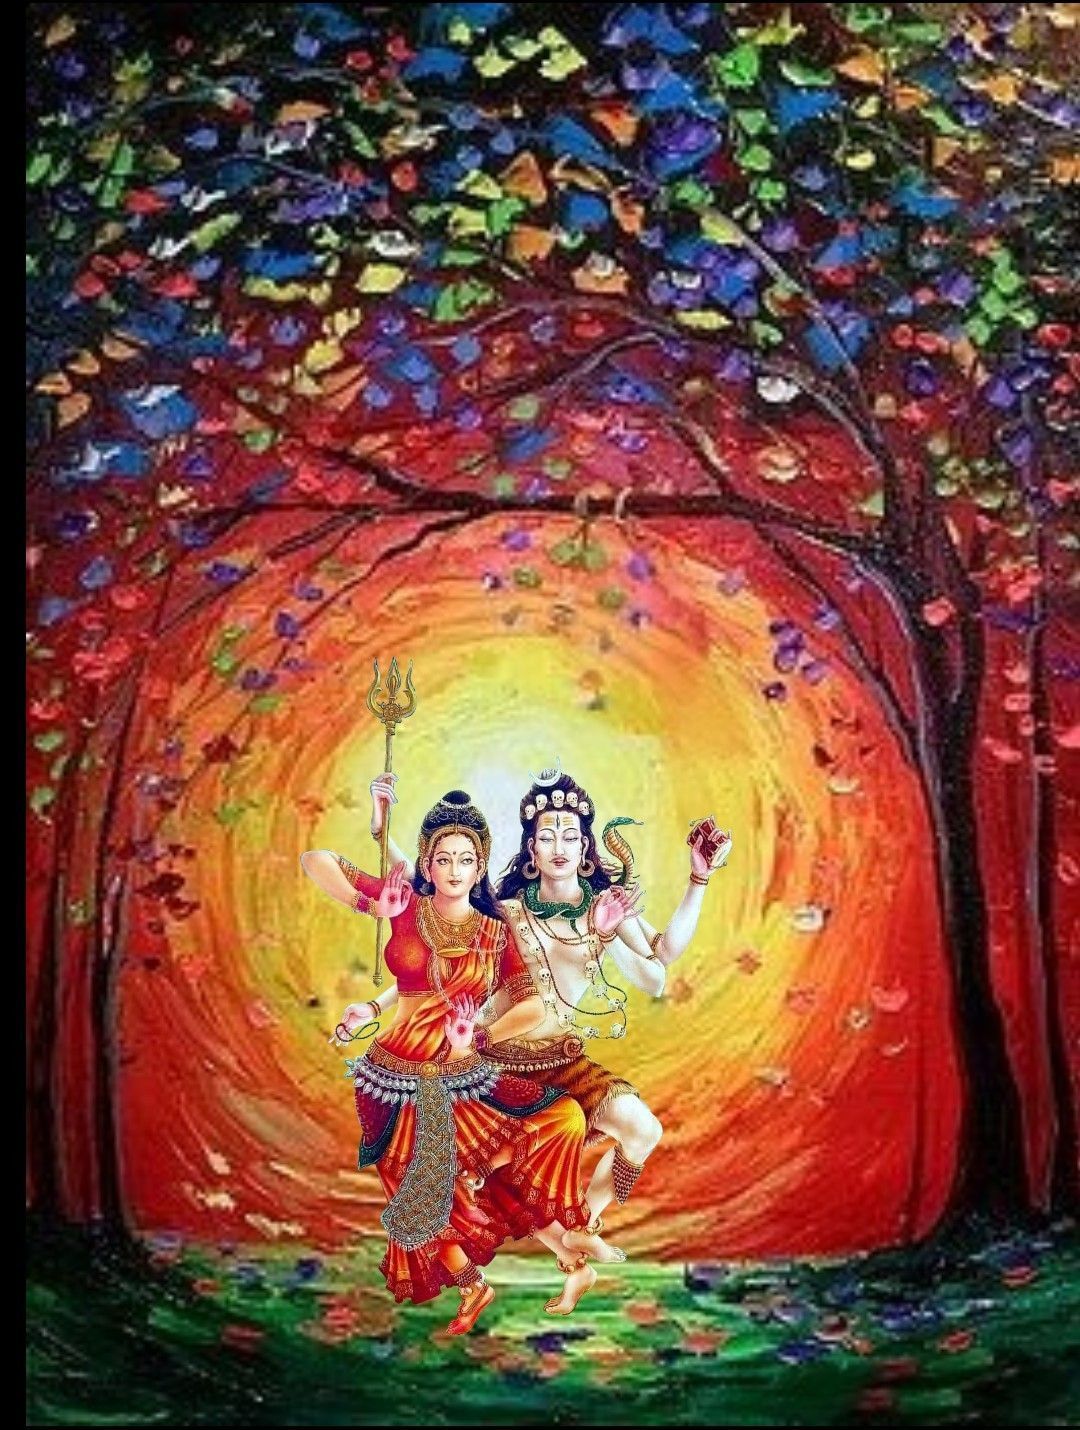 Shiva Love Wallpapers - Wallpaper Cave